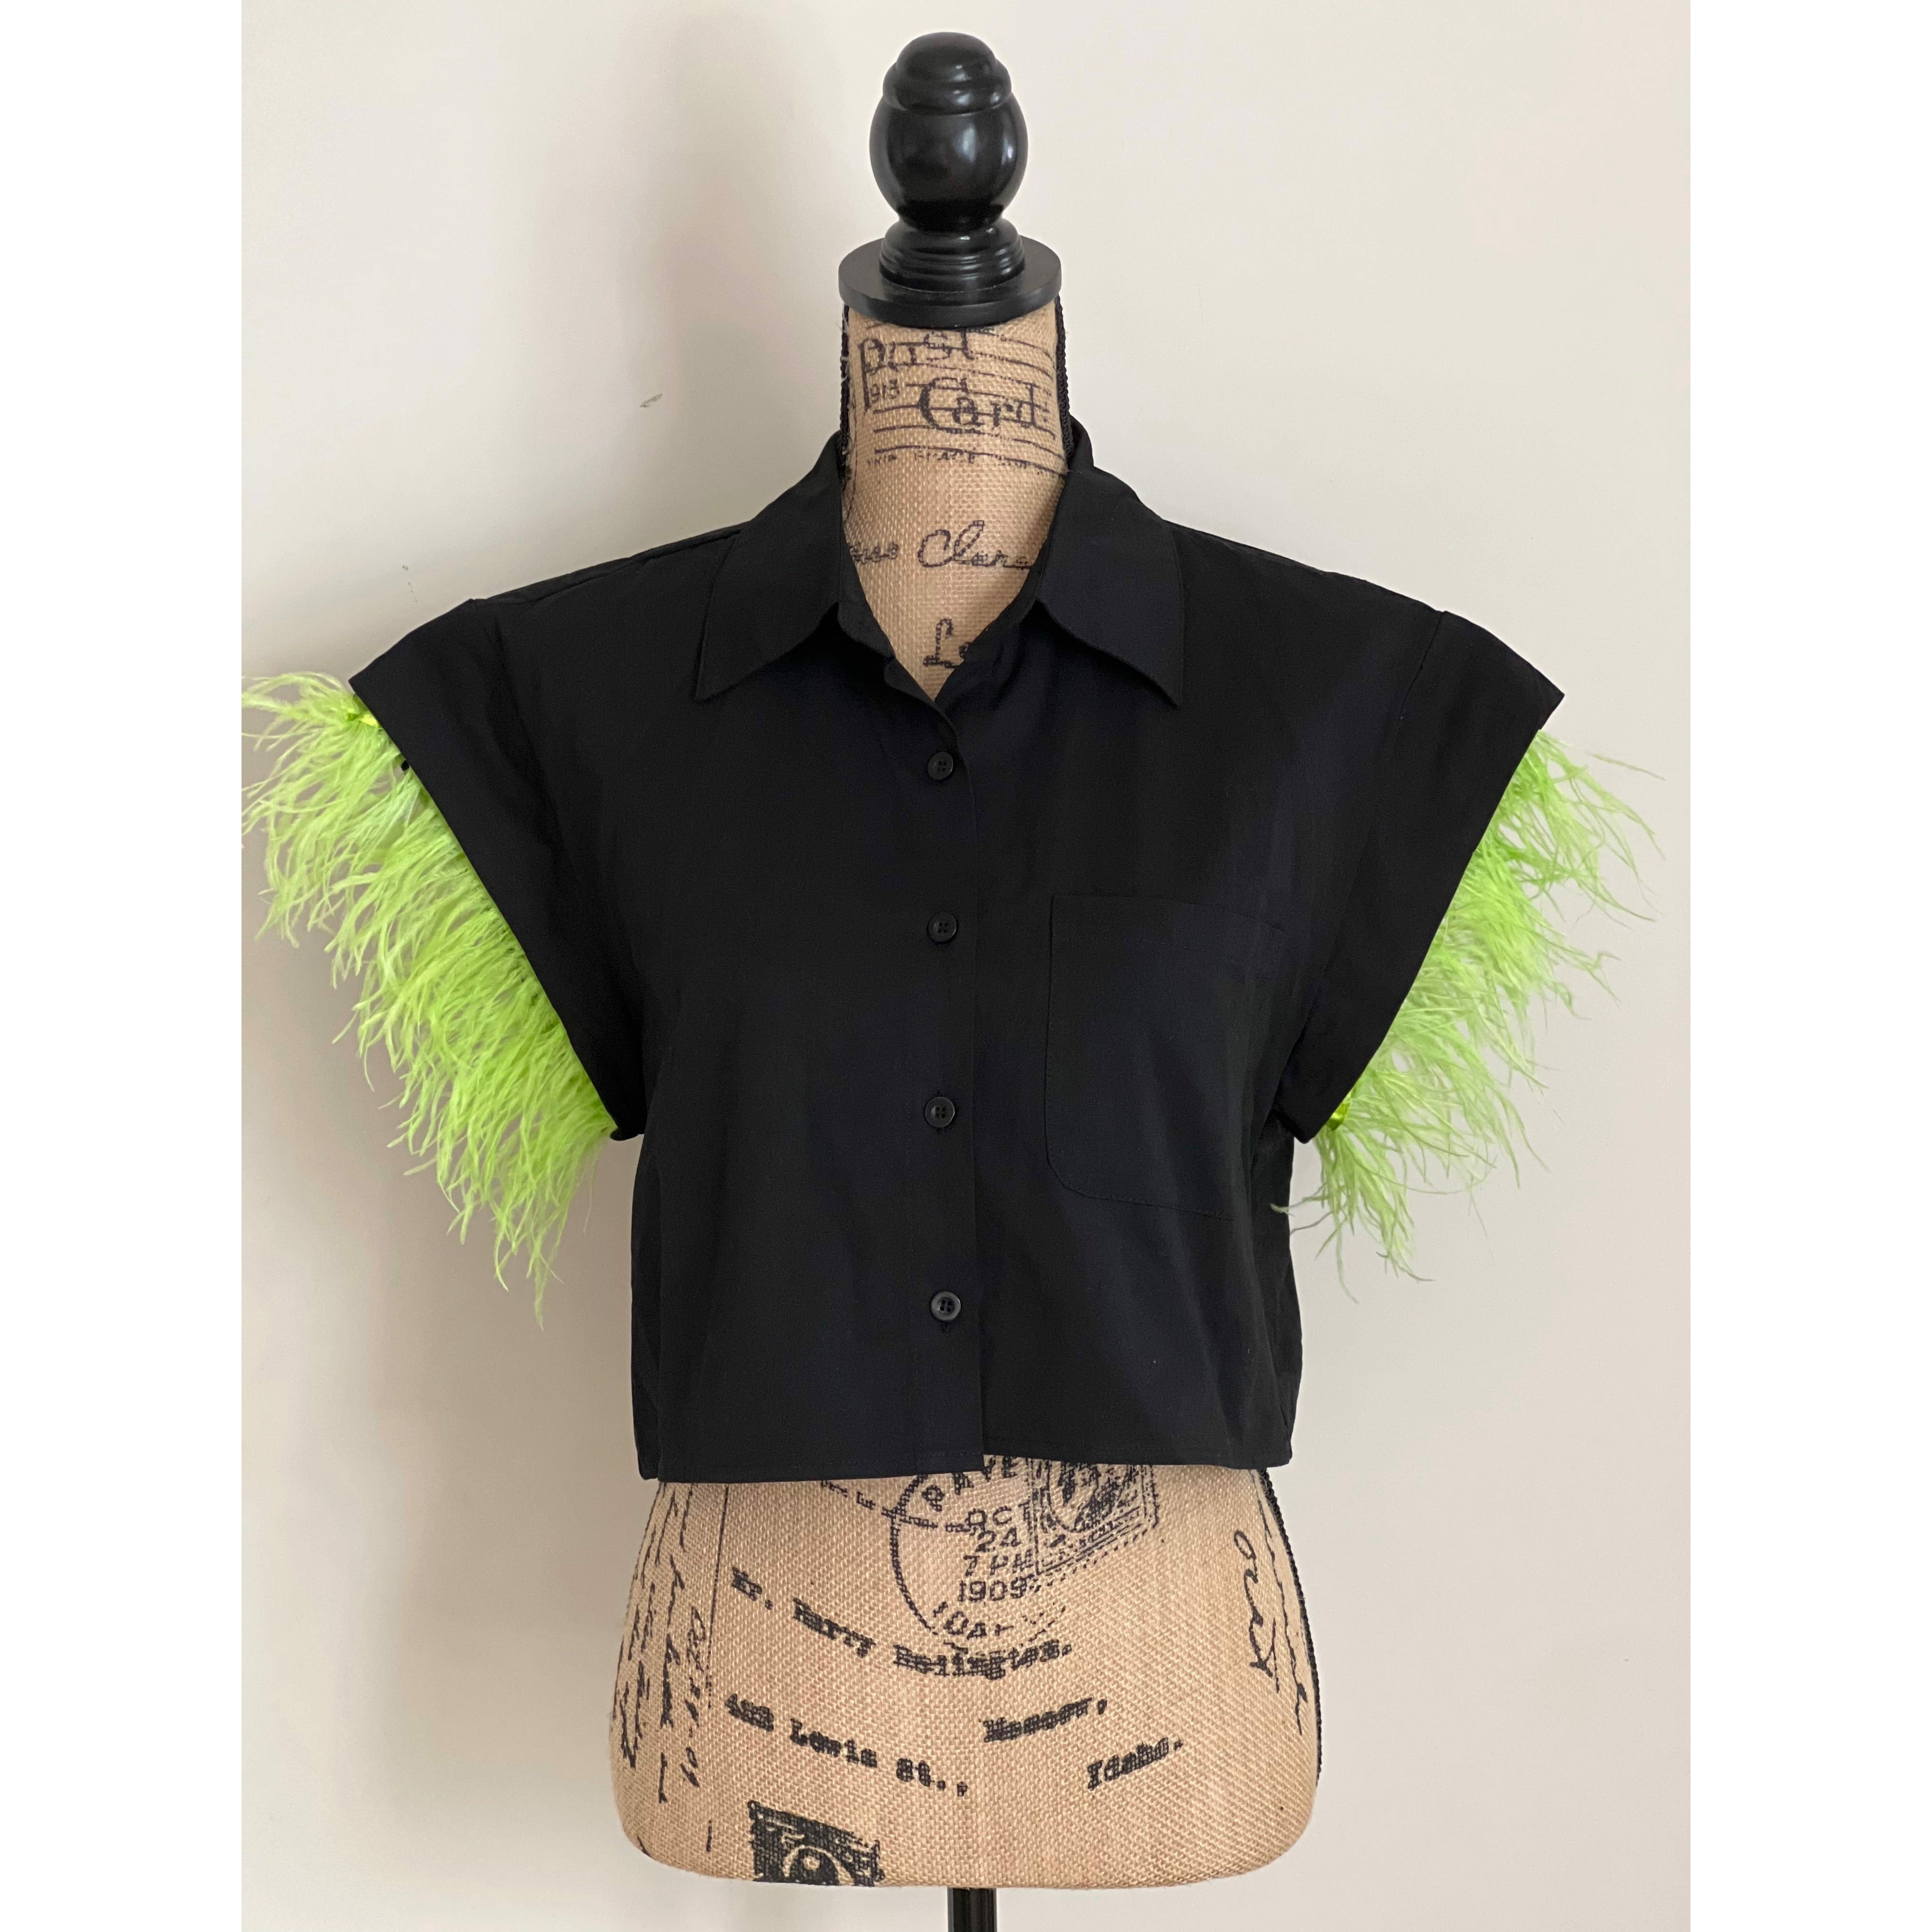 Black w/ Neon Green Feather Sleeve Crop Top